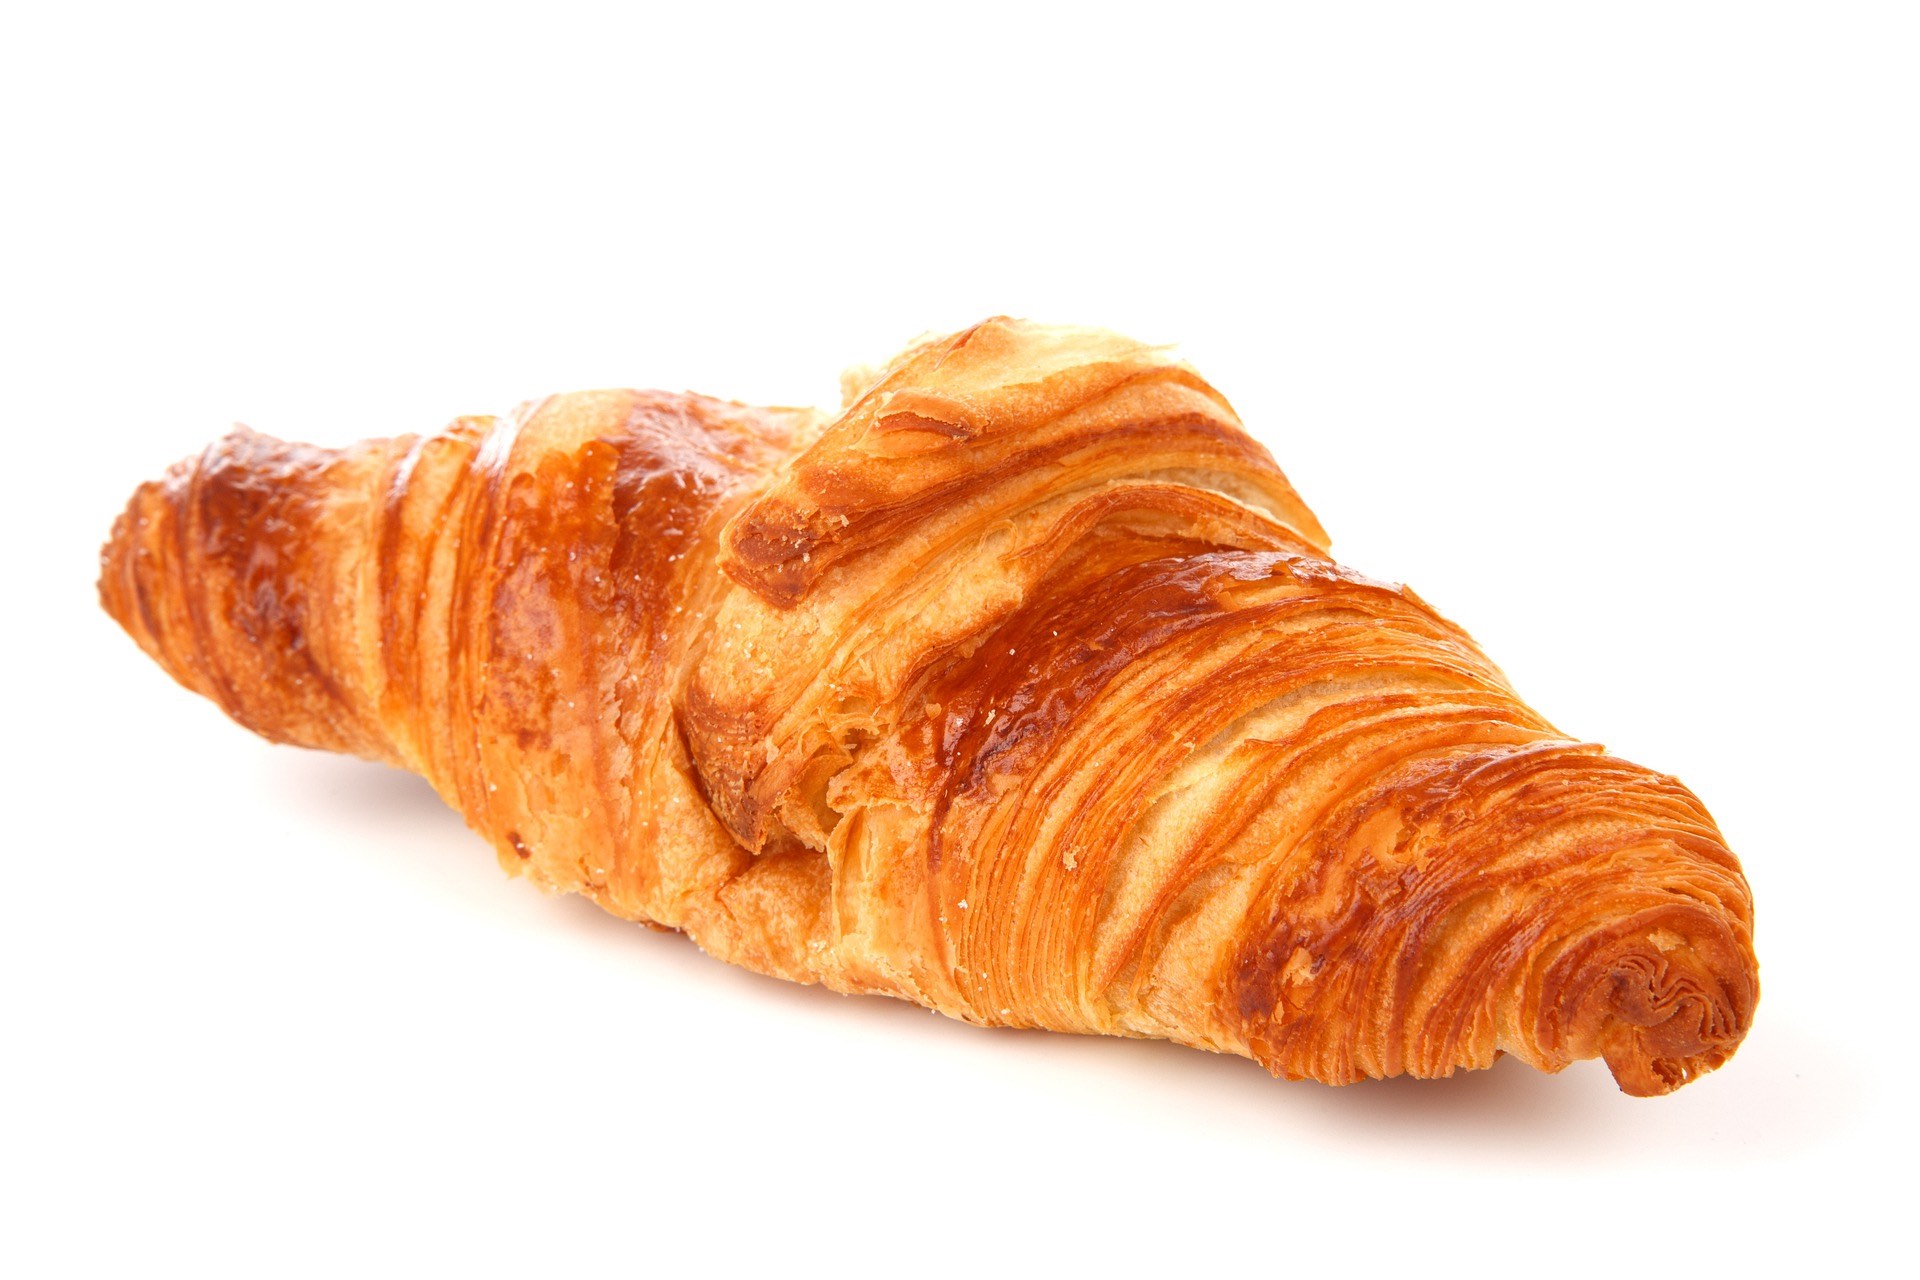 a close up of a croissant